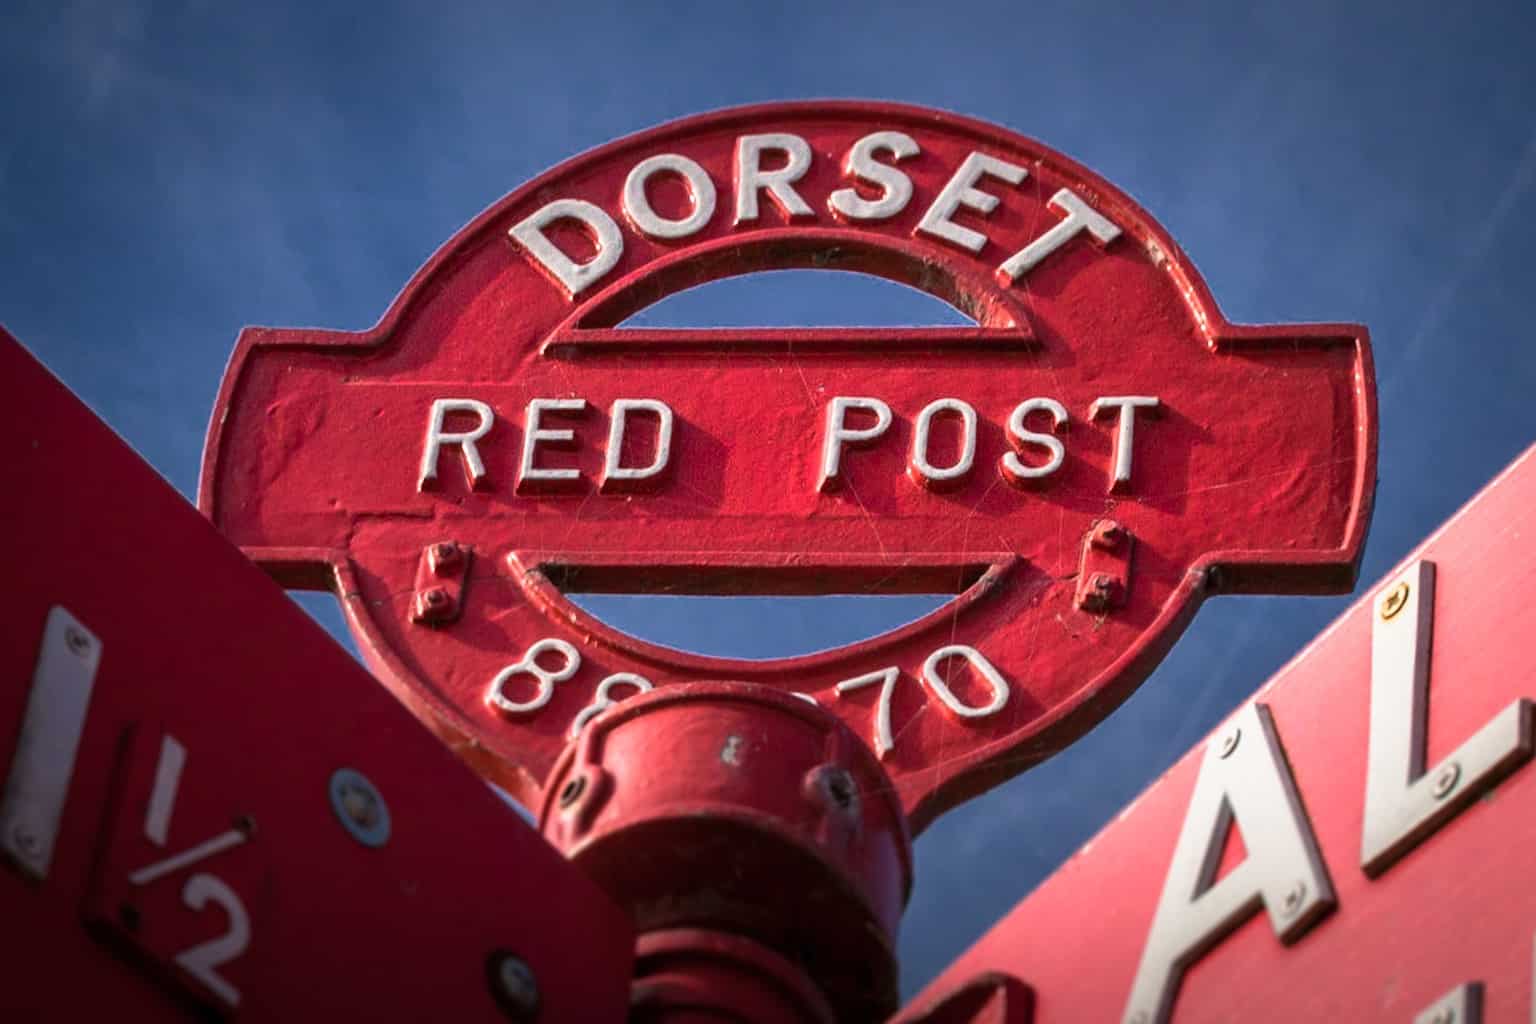  Dorset Red Post 